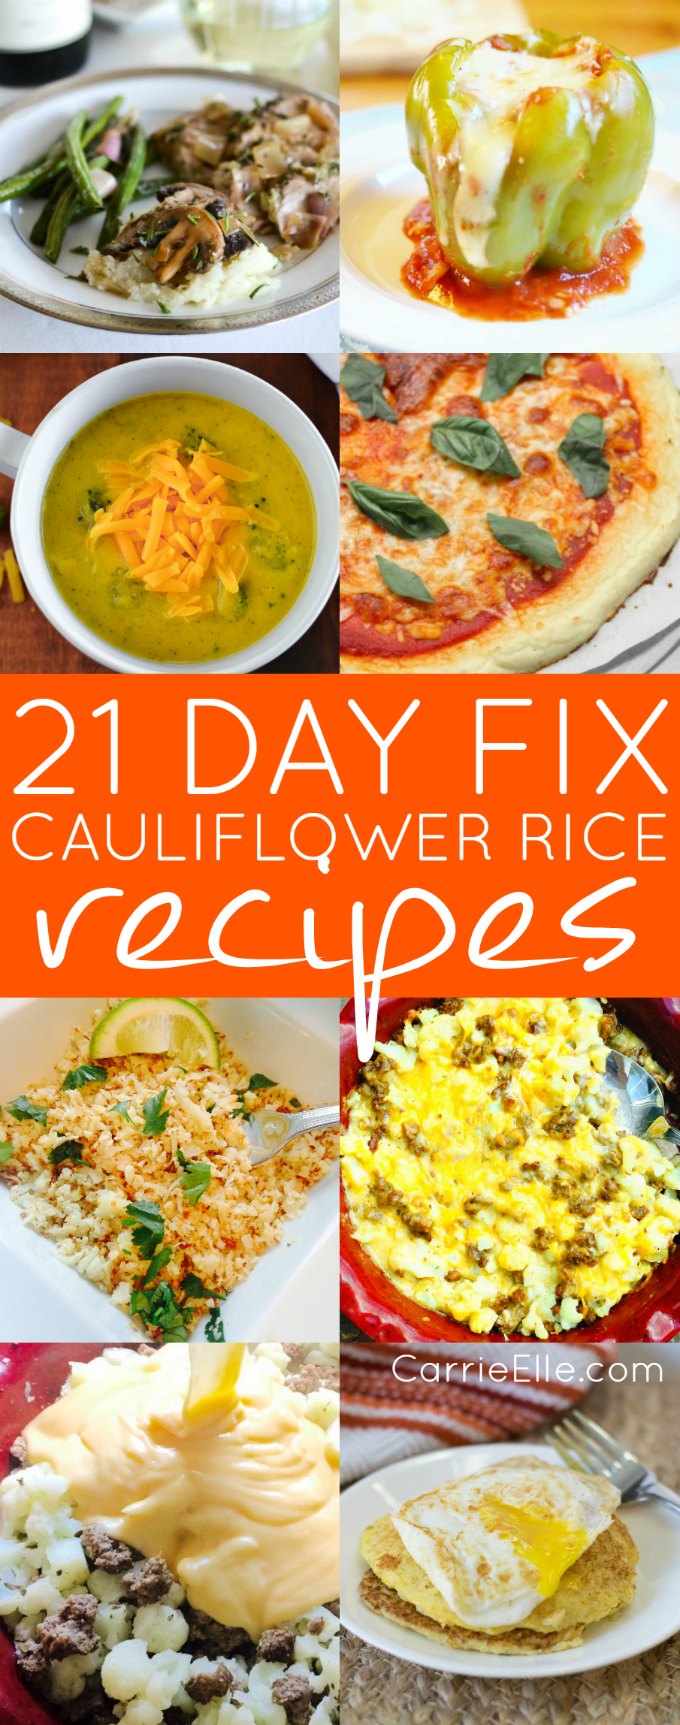 21 Day Fix Cauliflower Rice Recipes